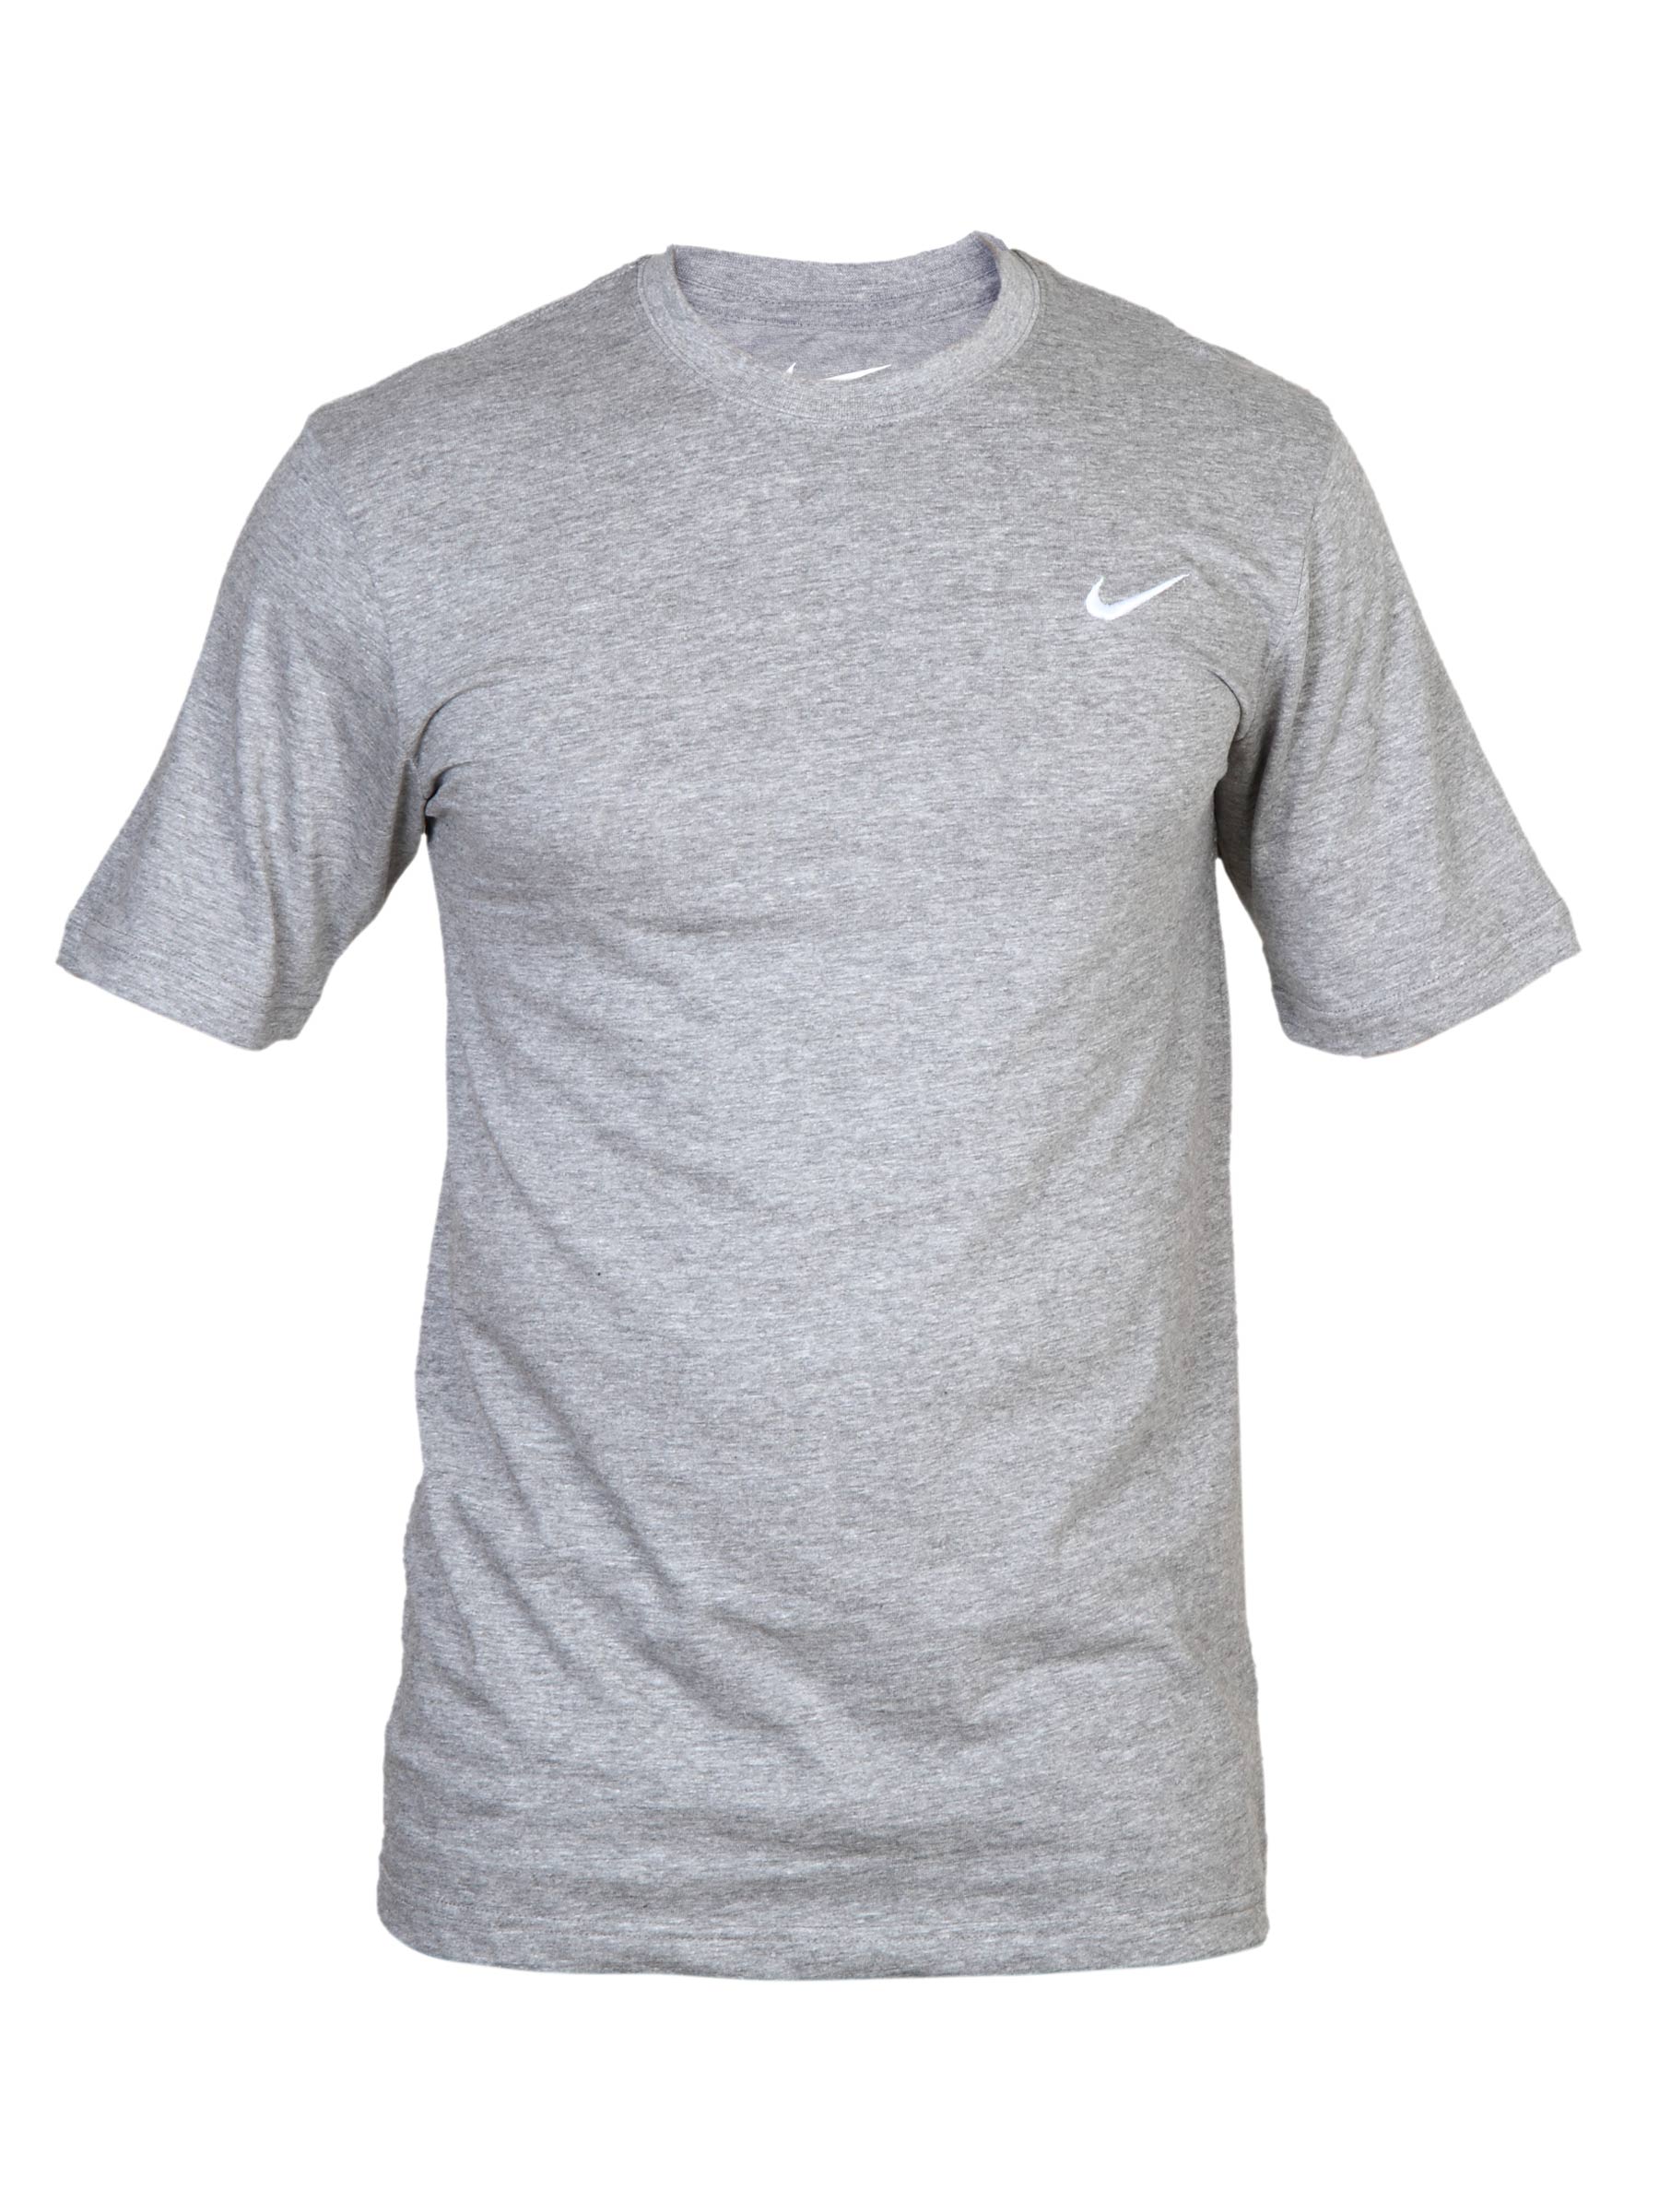 Nike Men's Swoosh Grey T-shirt